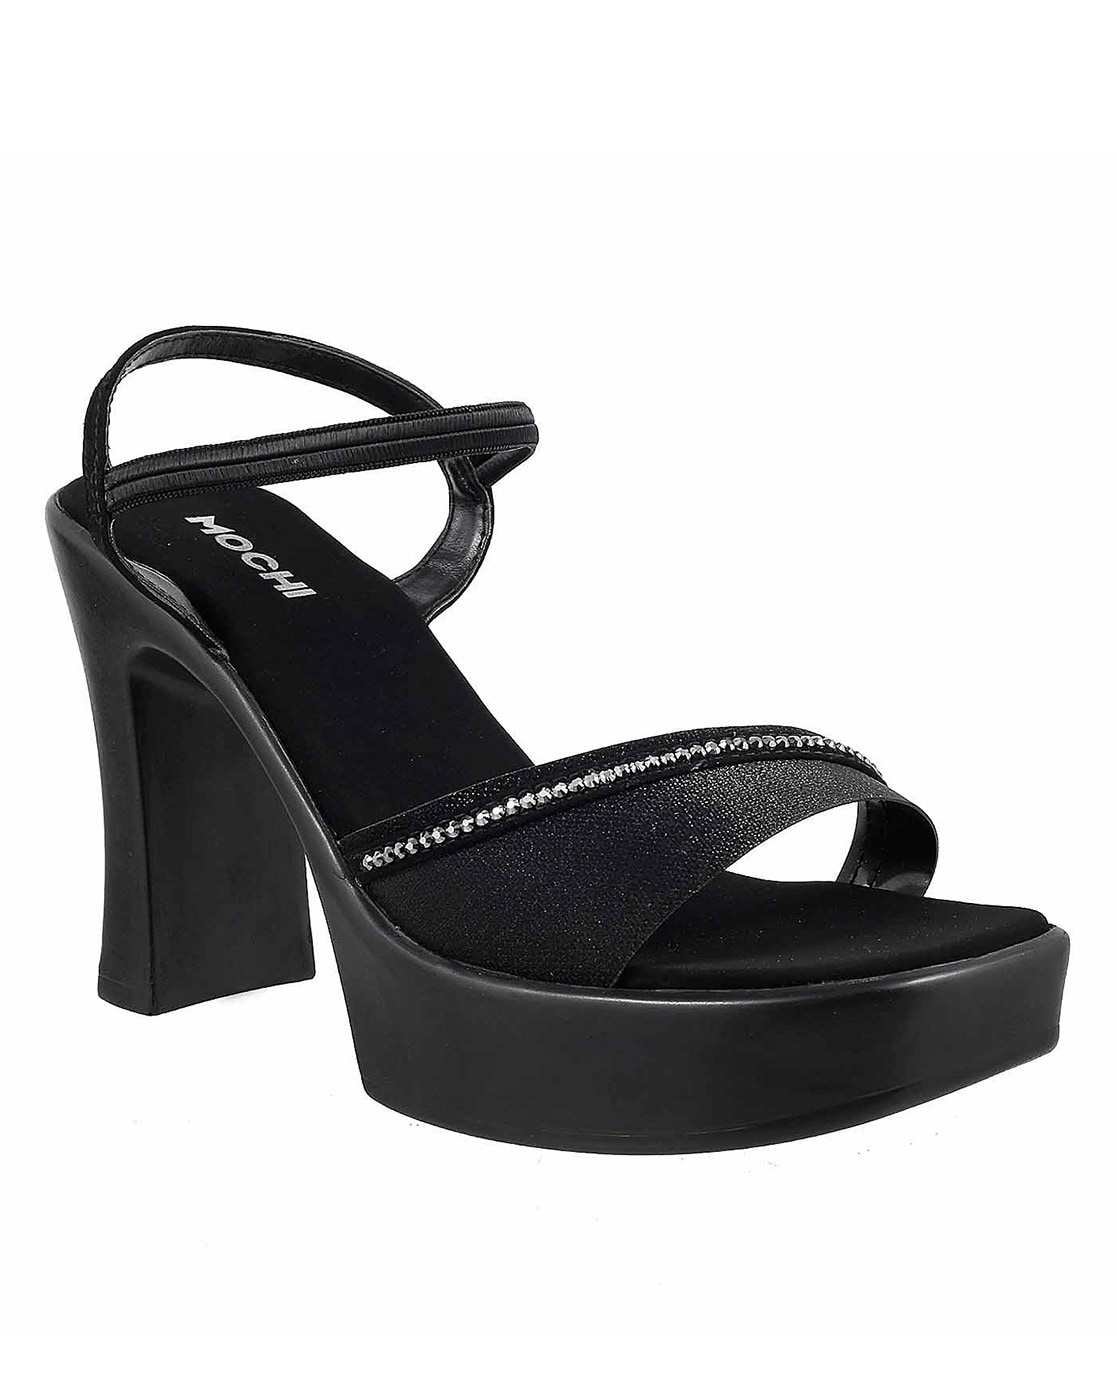 Michelle Morgan 913RJ096 Women's Black Heels